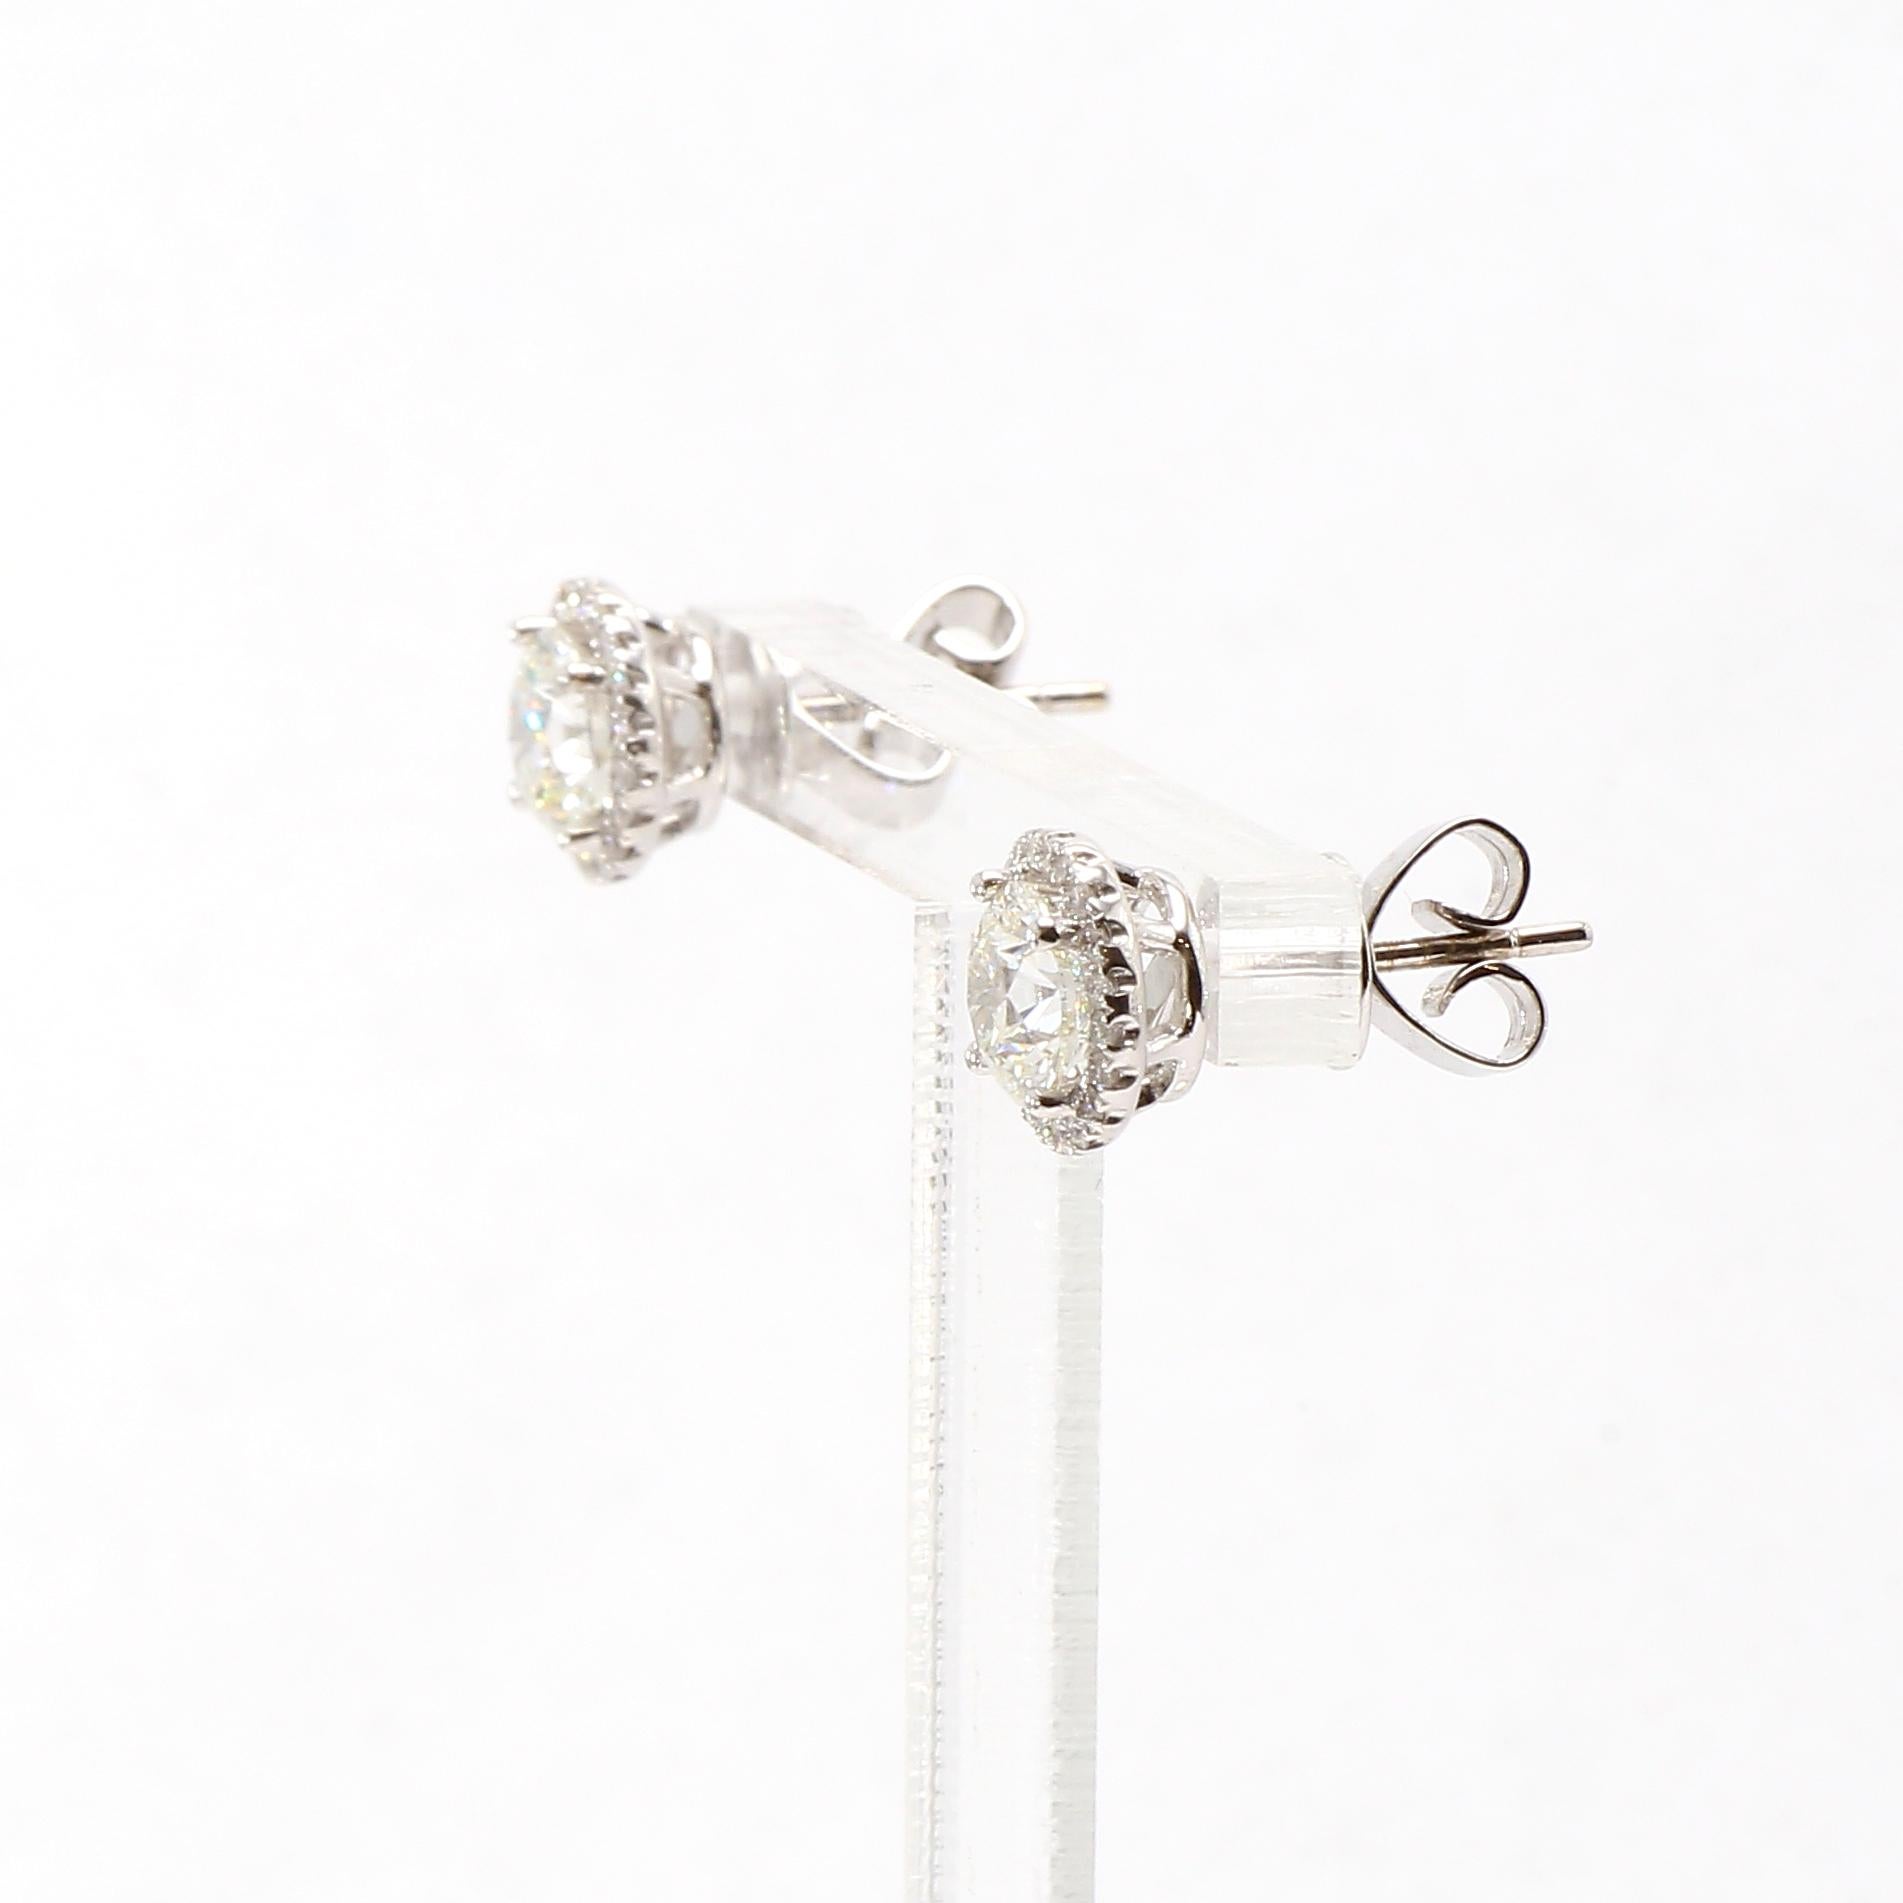 Round Cut Halo Design Diamonds Studs Earrings in 18K White Gold Diamonds. For Sale